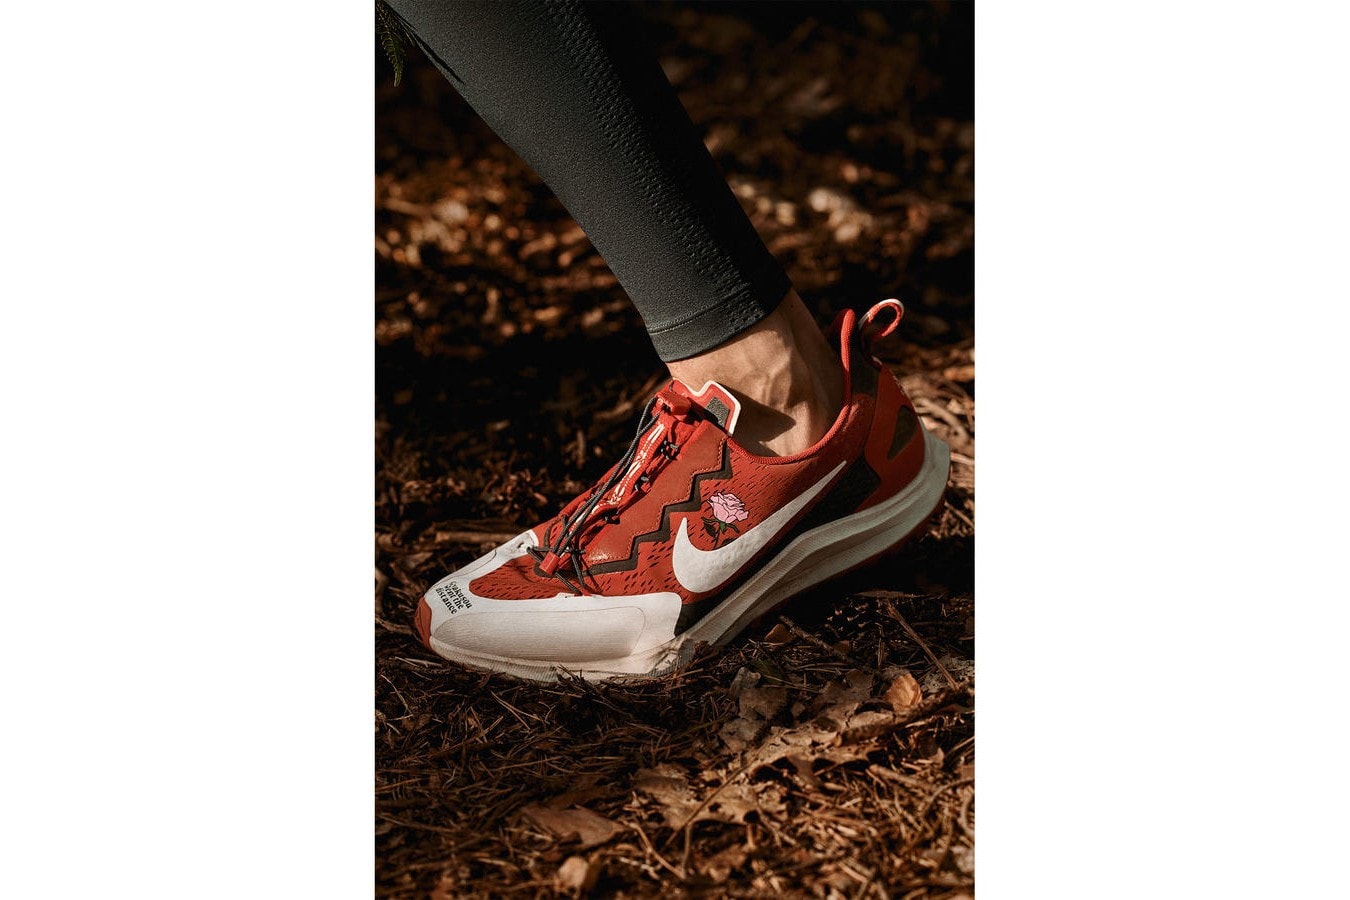 UNDERCOVER x Nike GYAKUSOU 2019 聯乘系列鞋款官方圖輯曝光